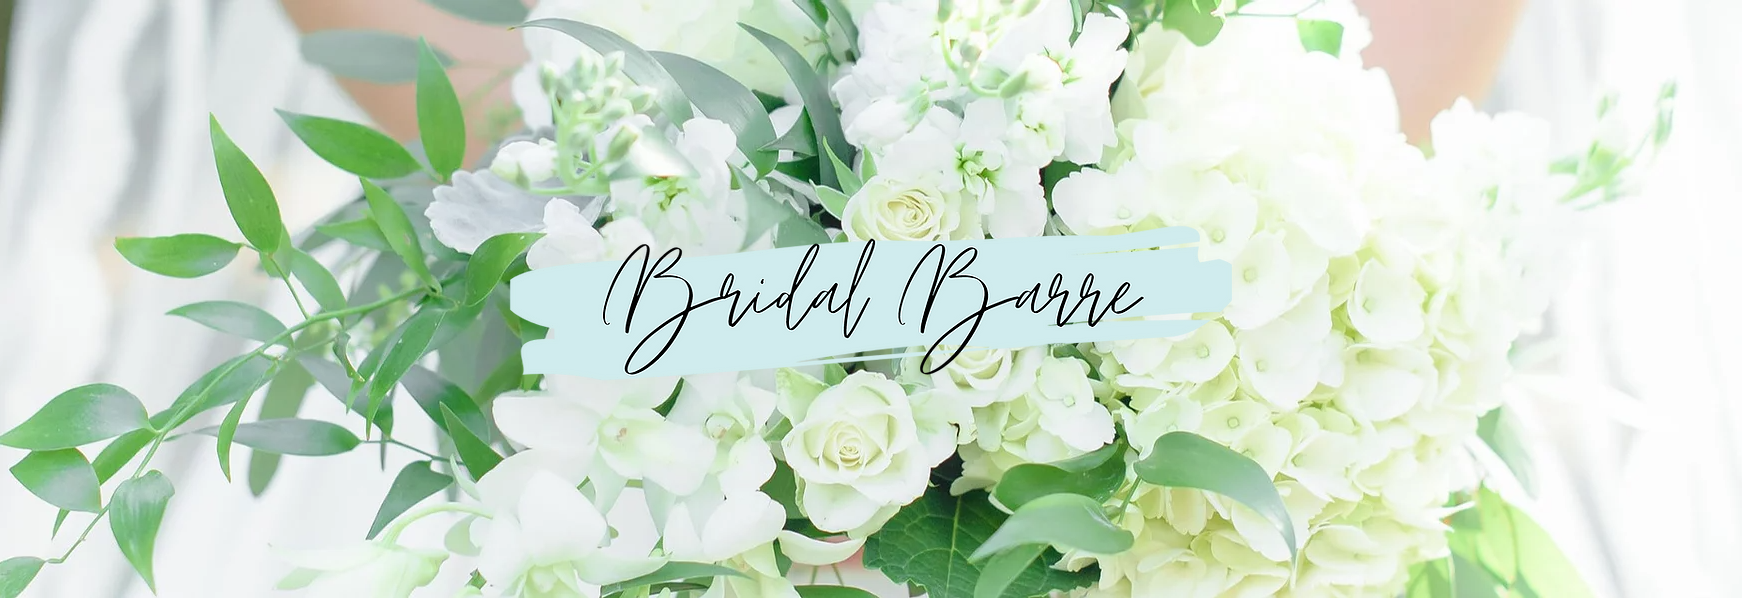 COMING SOON: Bridal Barre!. Desktop Image